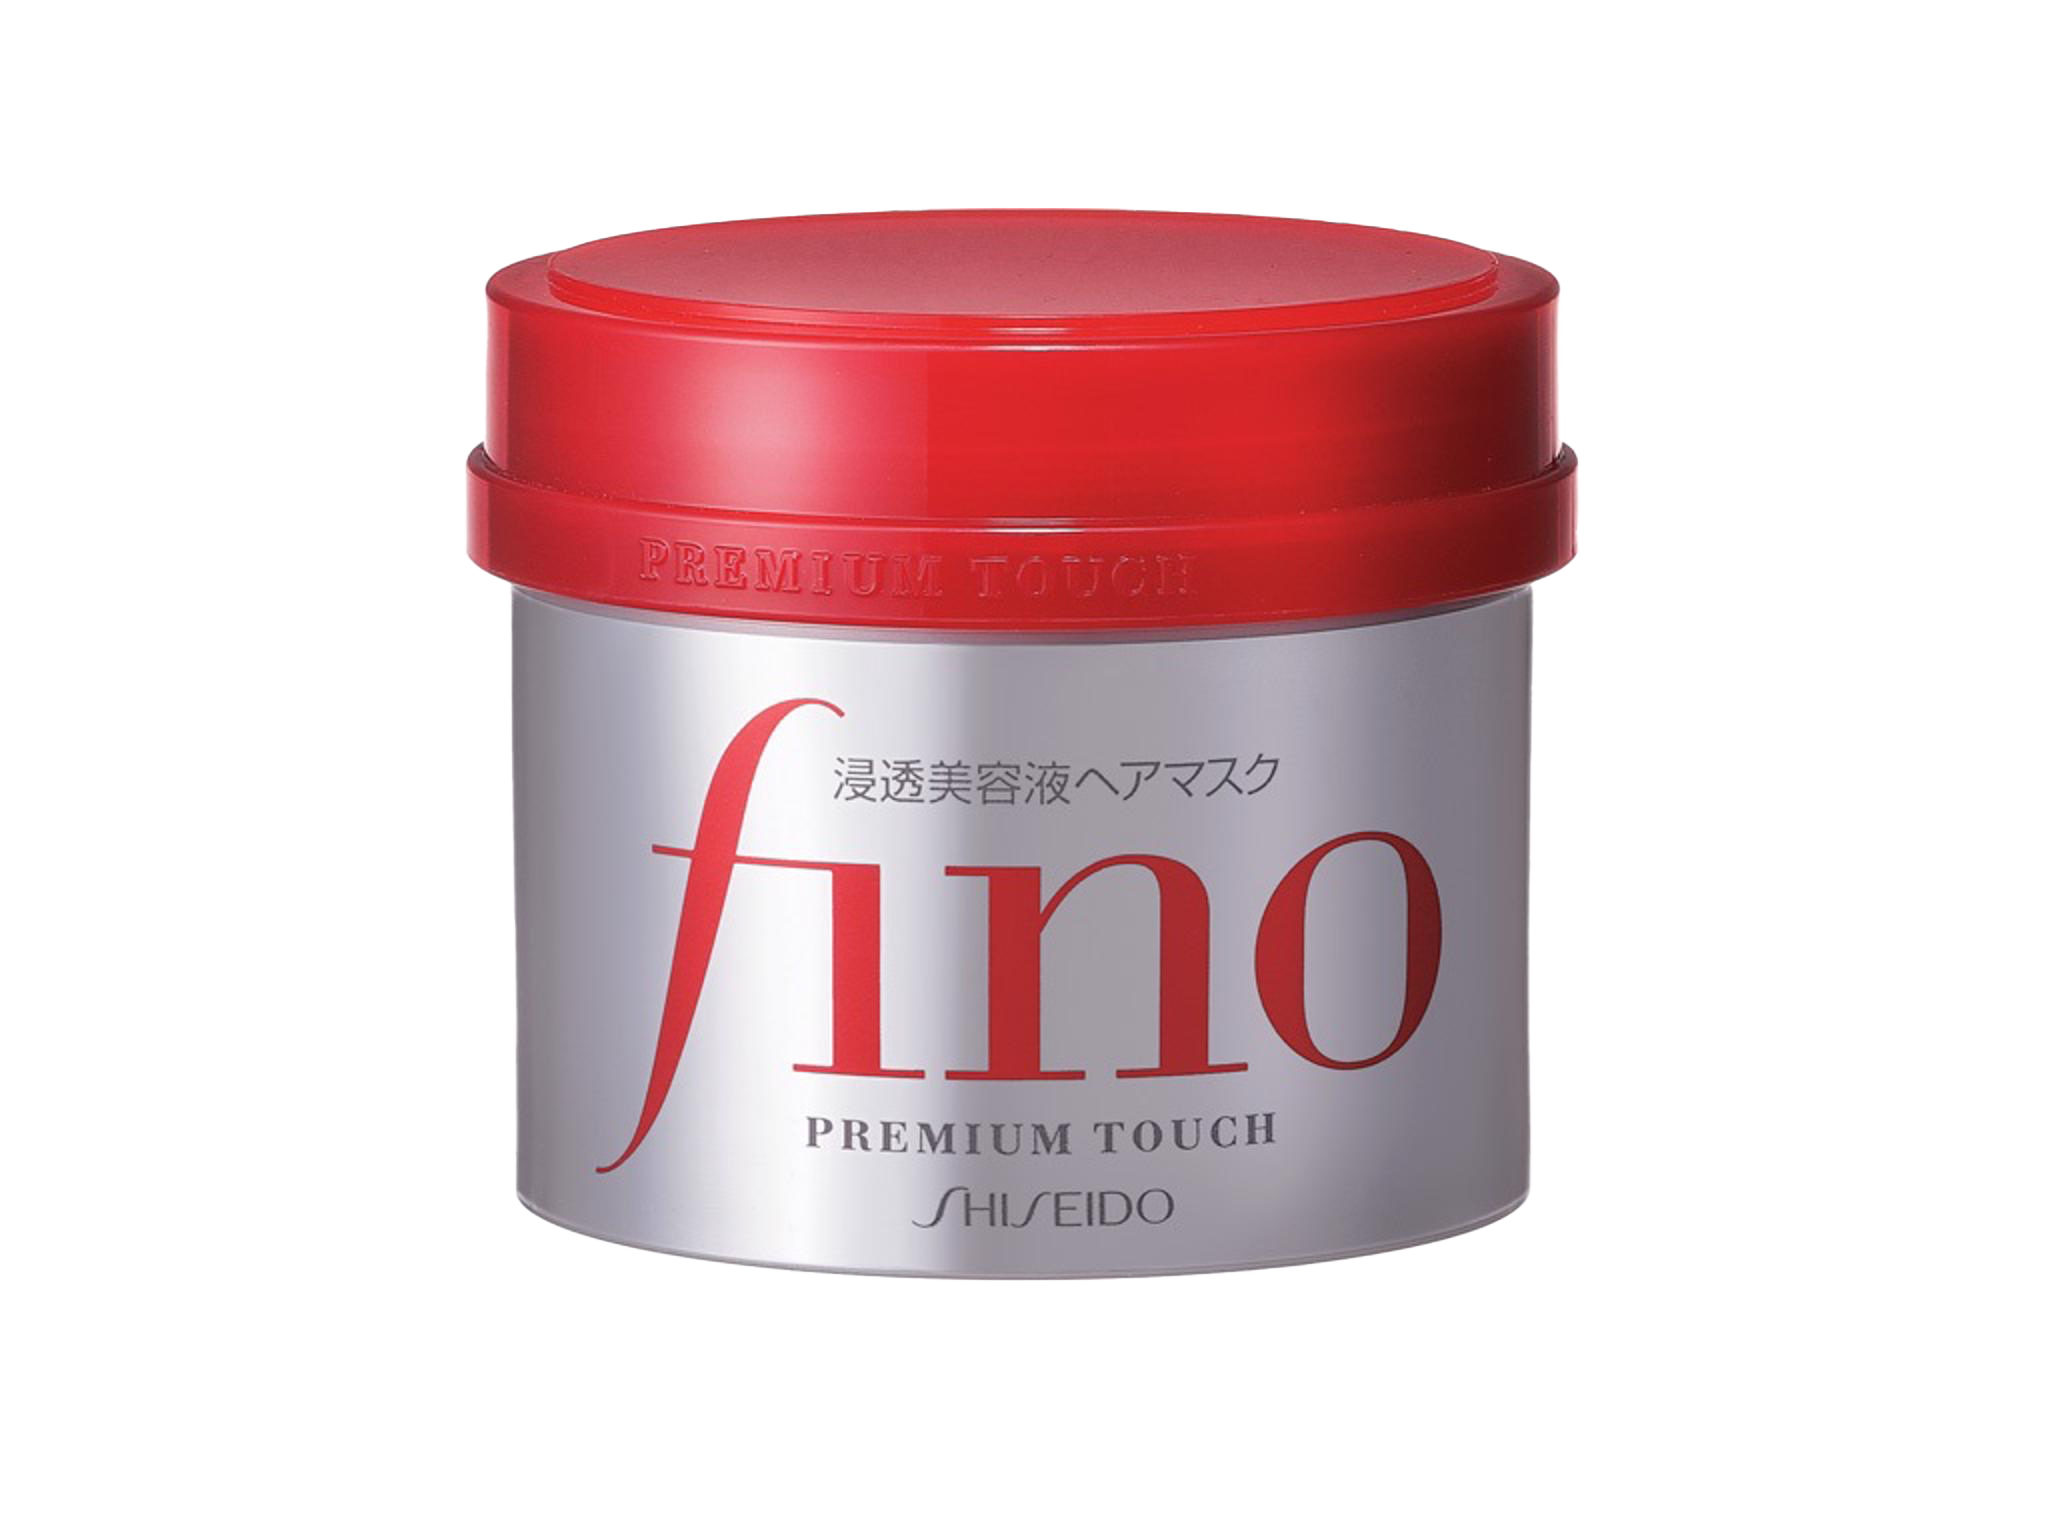  Shiseido Fino Premium Touch Hair Mask, 8.11 Ounce : Beauty &  Personal Care